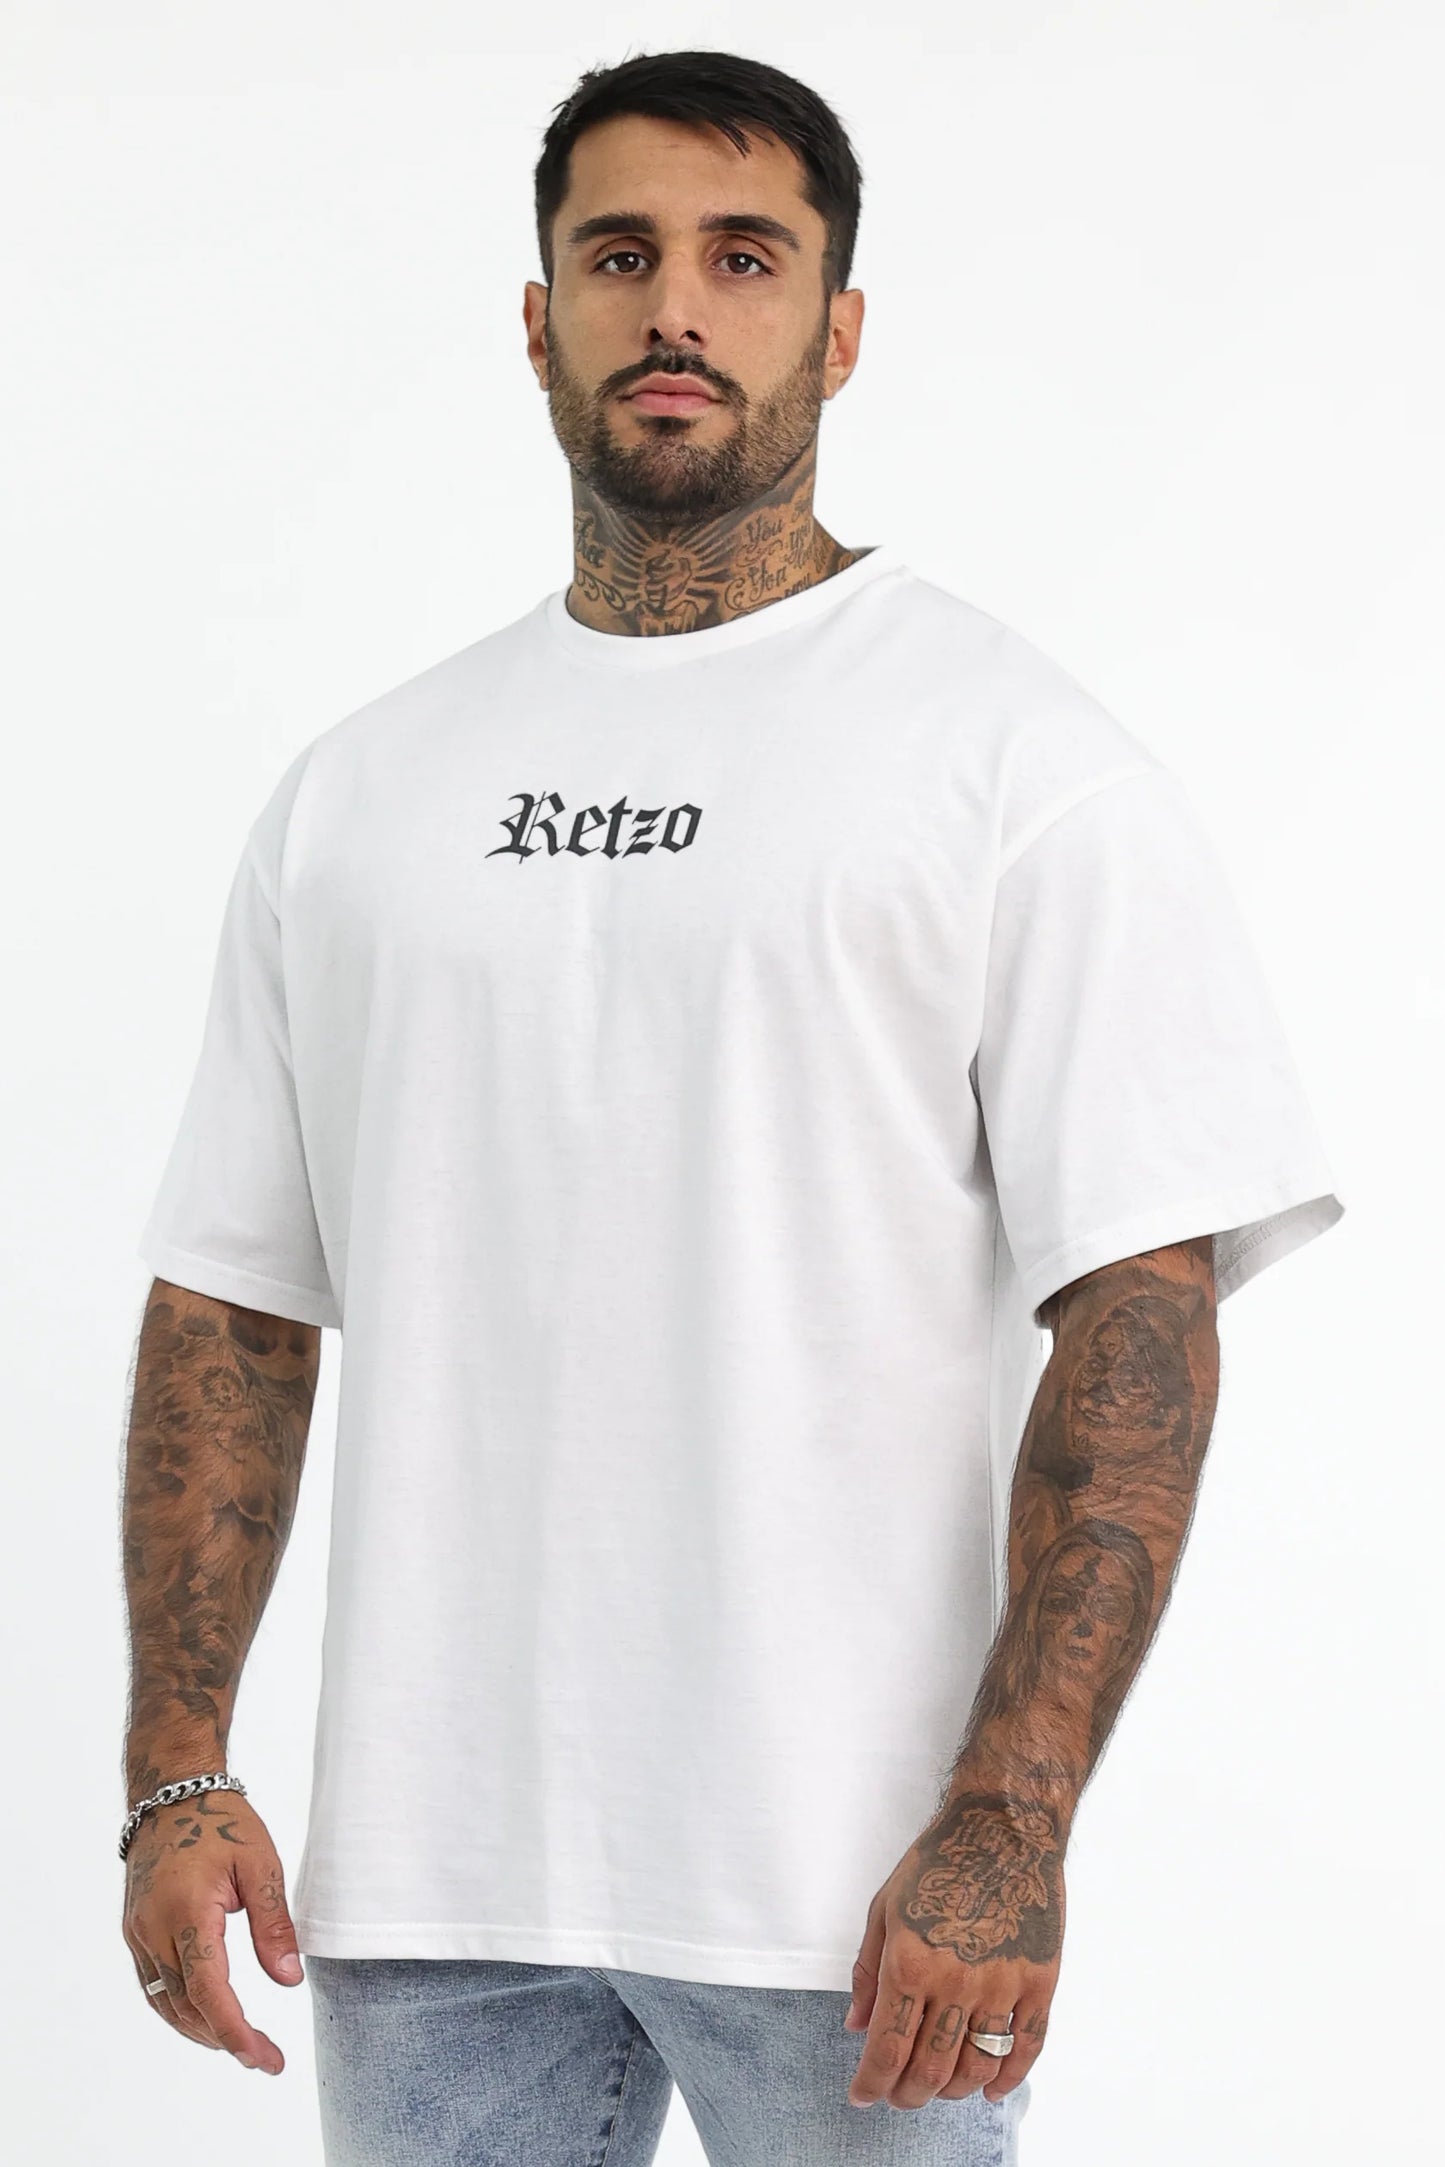 Retzo Frasca T-Shirt FW23